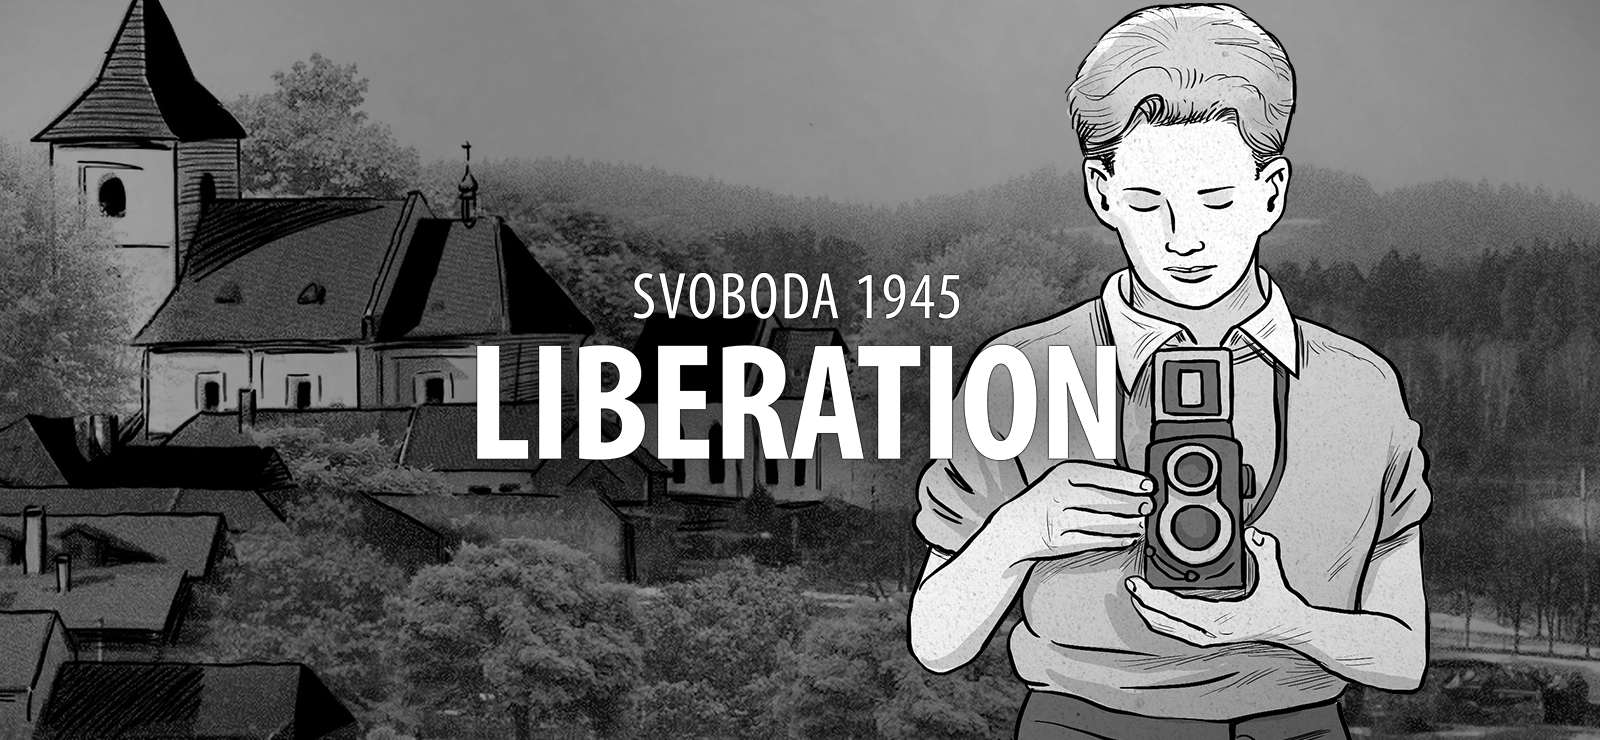 Svoboda 1945: Liberation